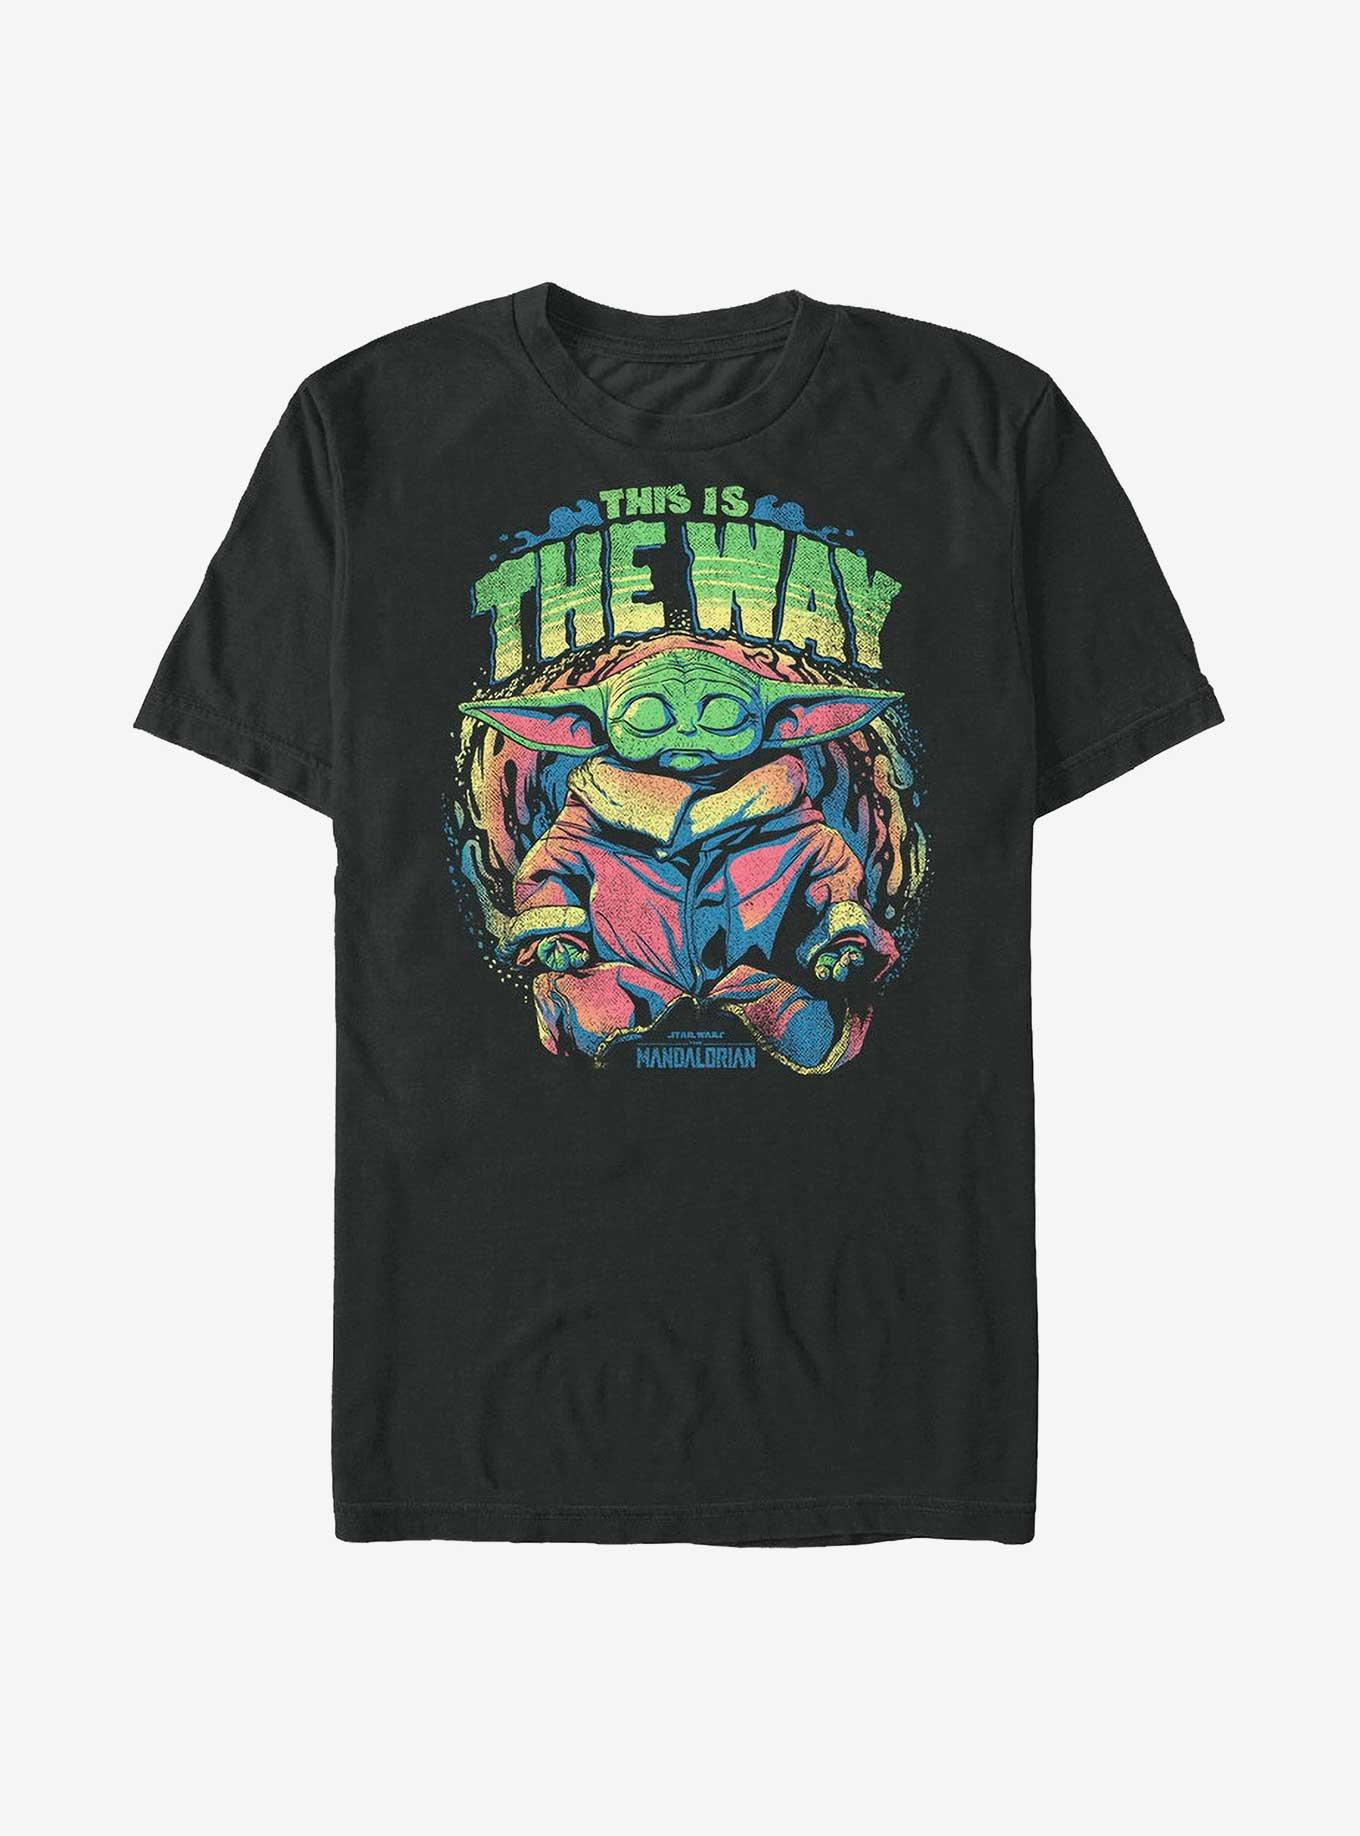 Star Wars The Mandalorian Meditation T-Shirt